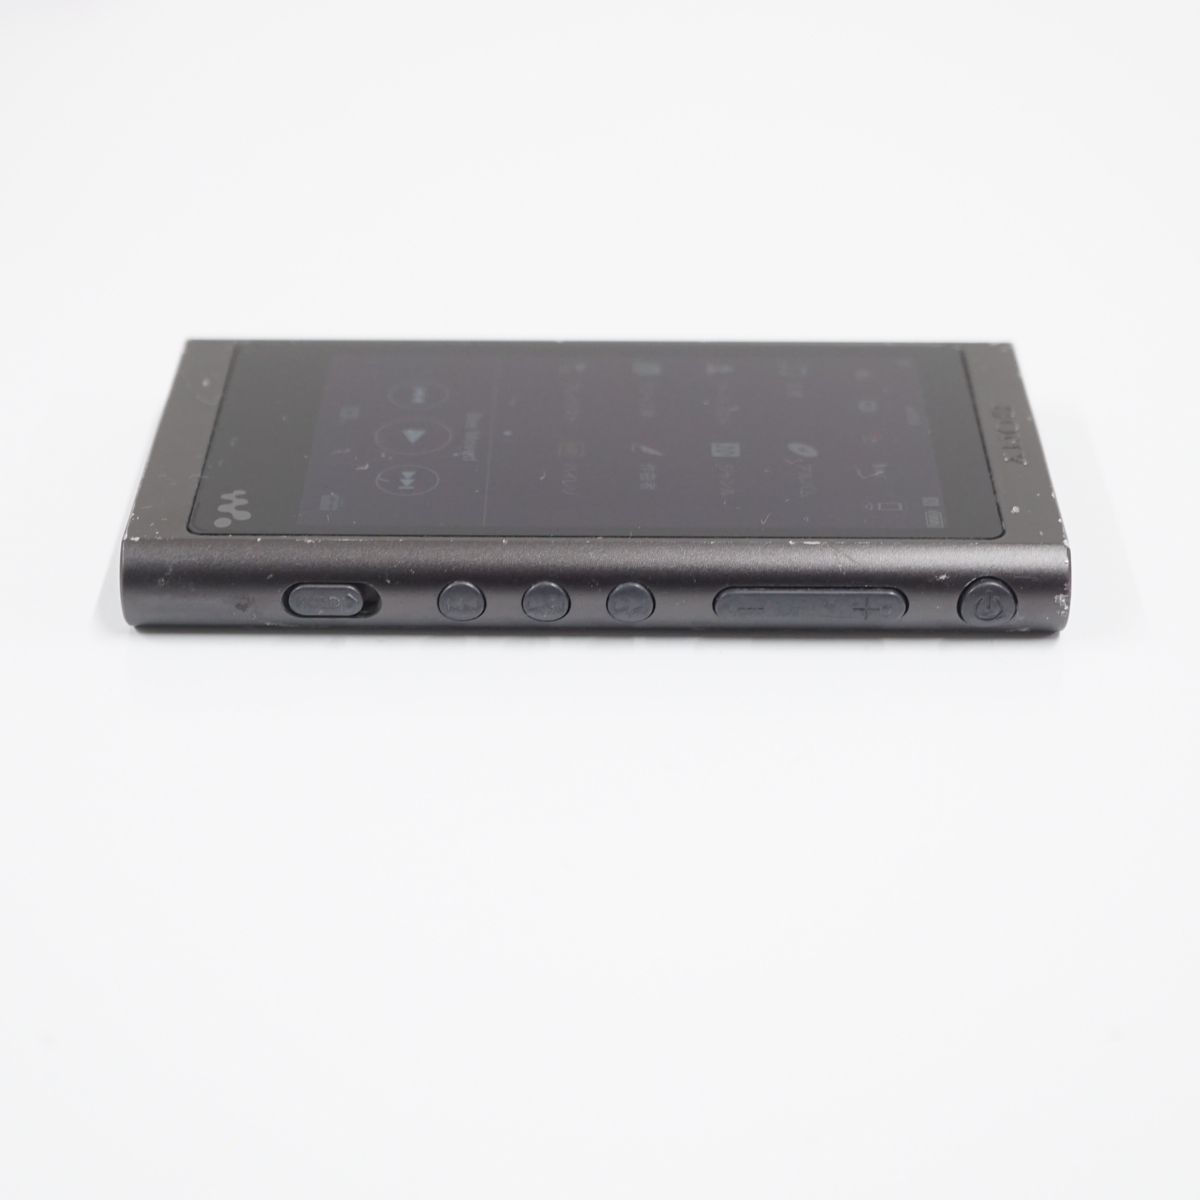 SONY Walkman ウォークマン NW-A57 64GB USED品 本体のみ グレイッシュブラック ハイレゾ Bluetooh 完動品 T  V8325 - メルカリ